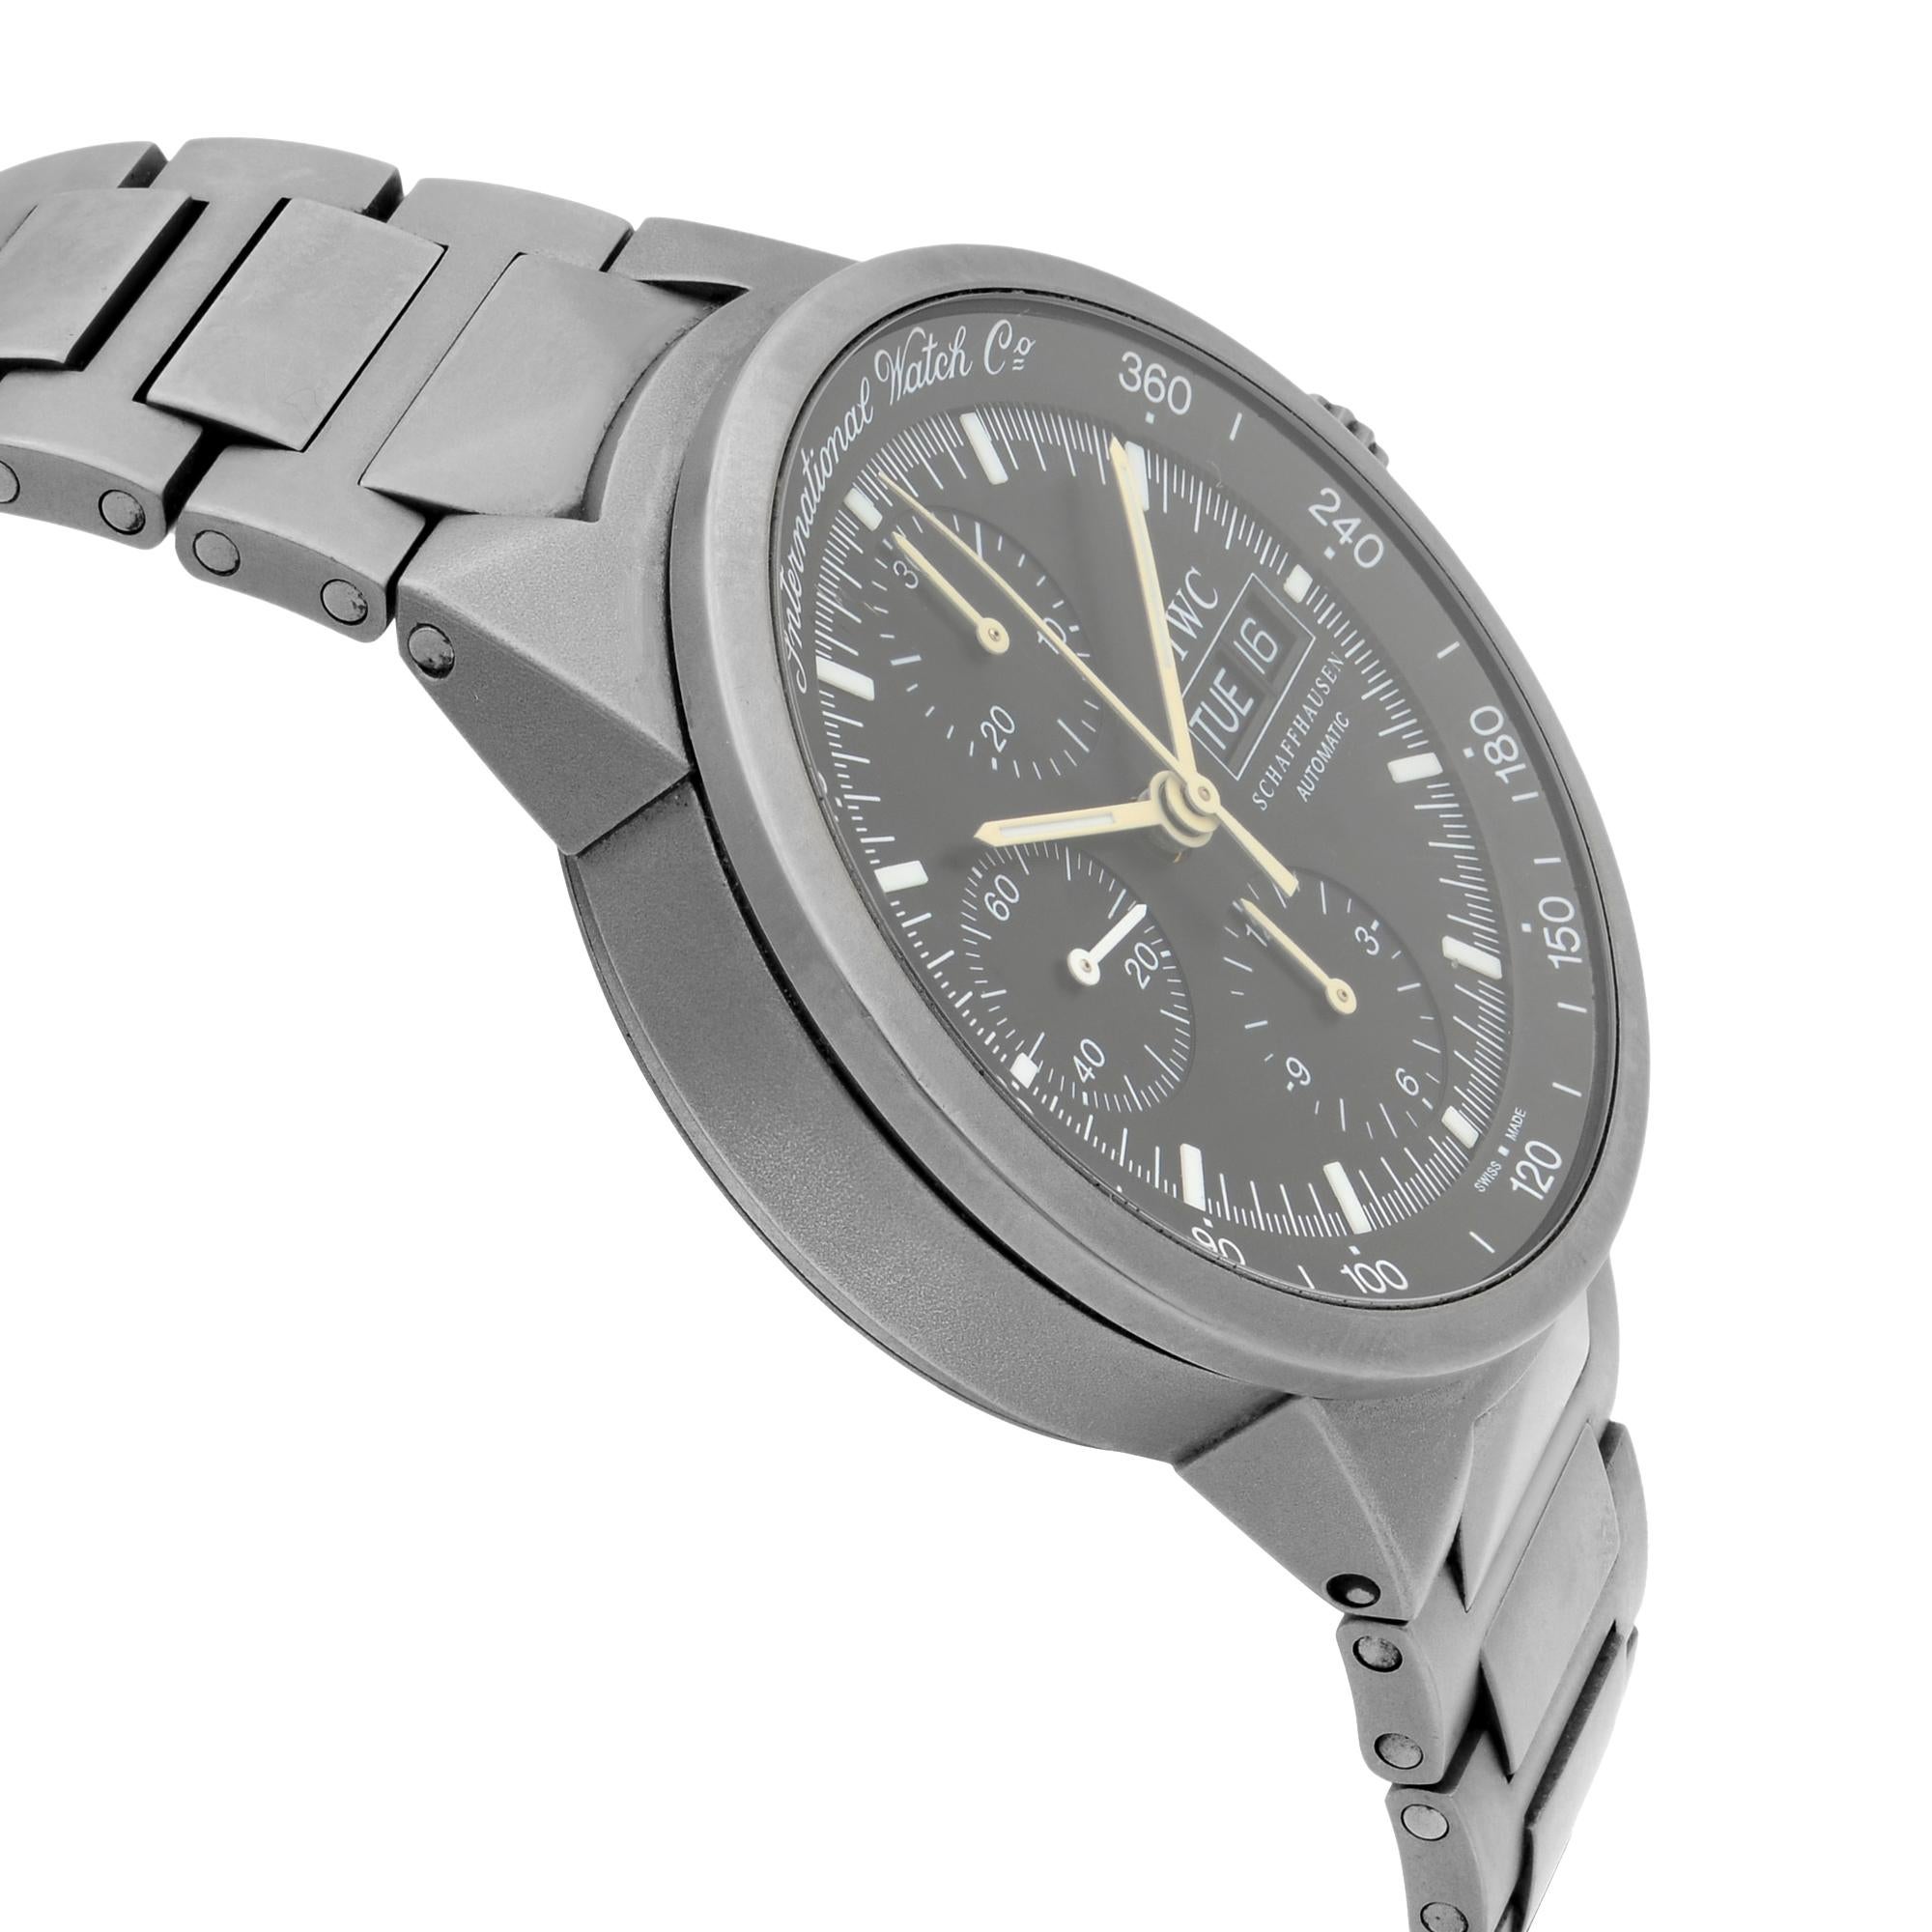 iwc gst chronograph titanium review